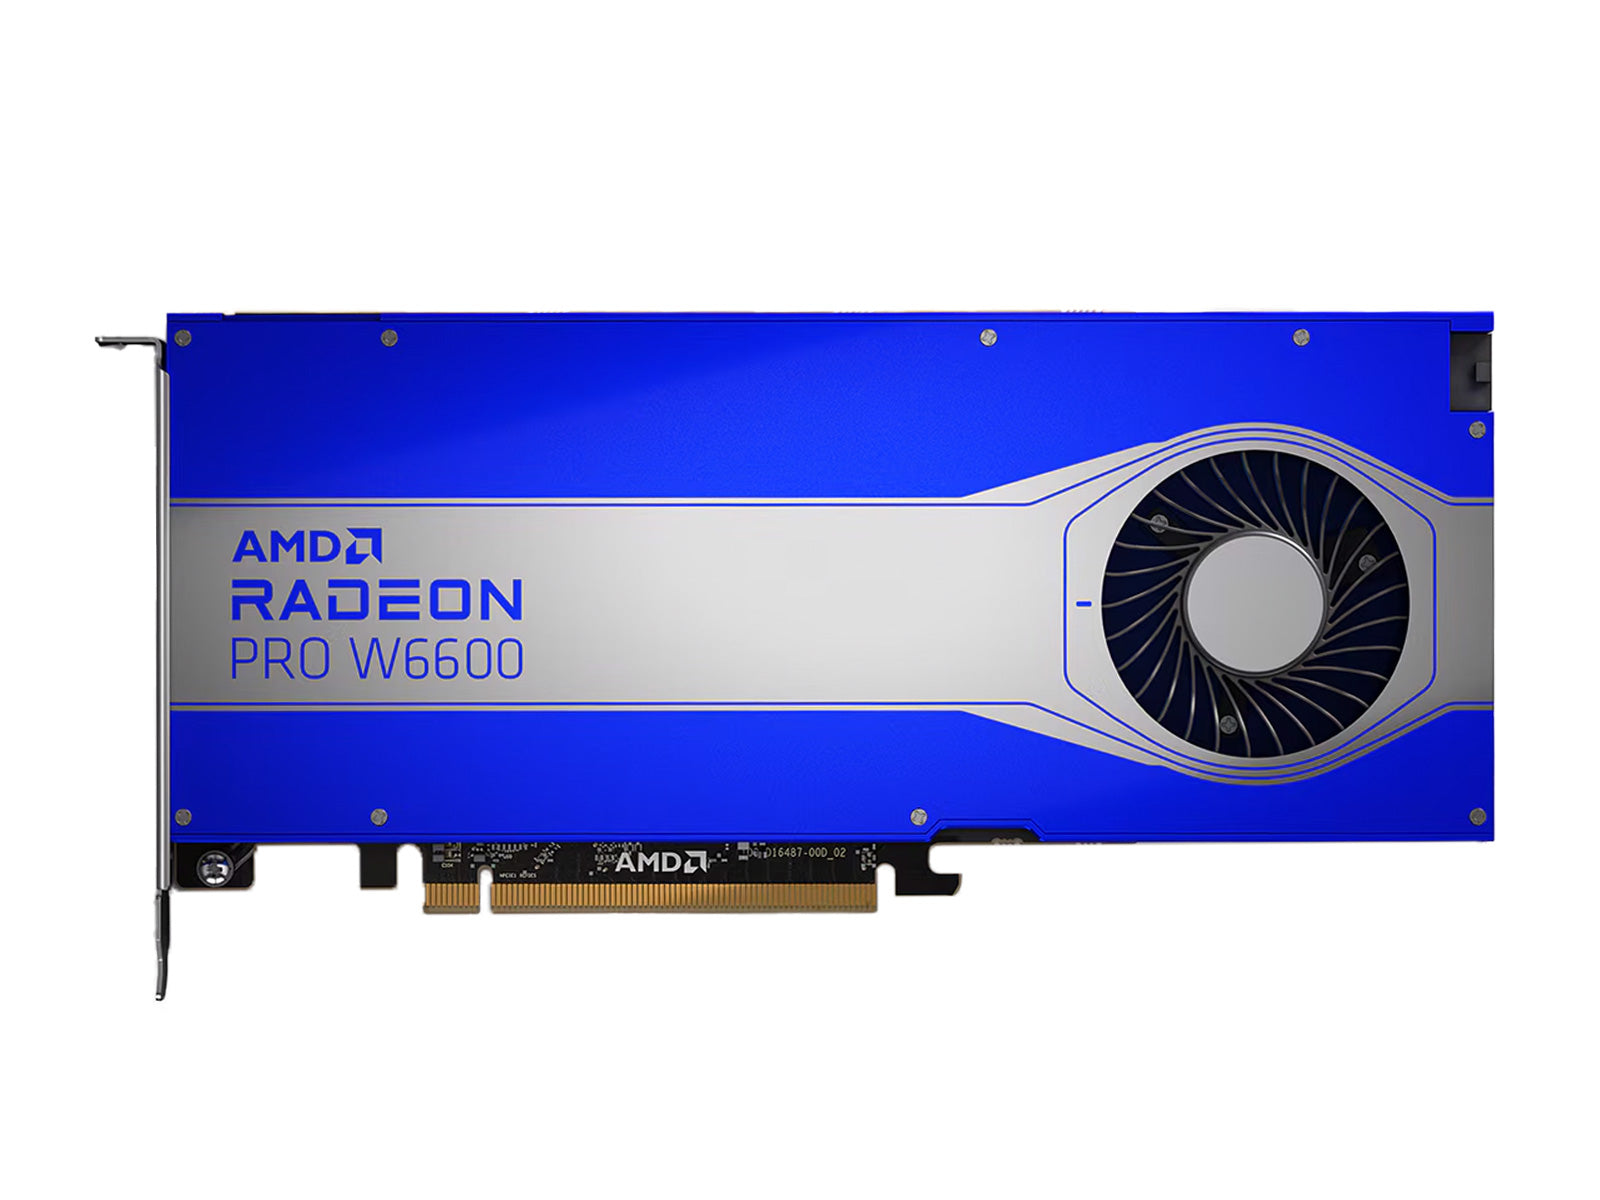 AMD Radeon Pro W6600 8GB Graphics Card